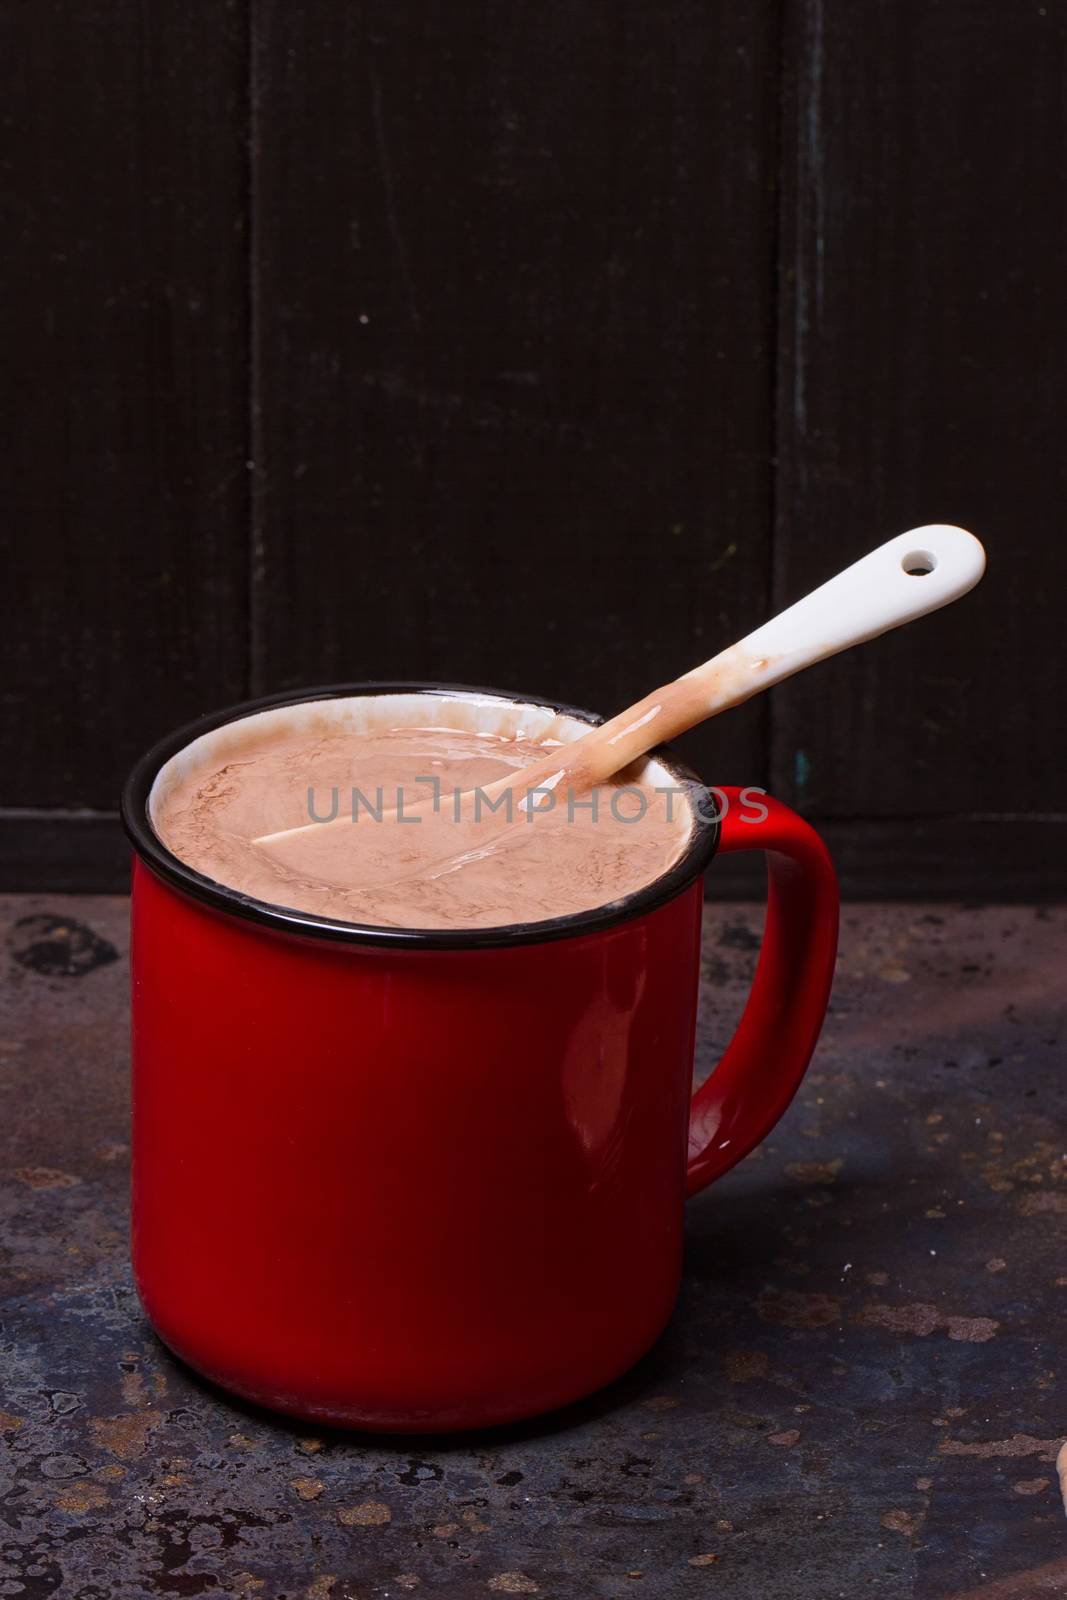 Hot chocolate in red mug on grunge background